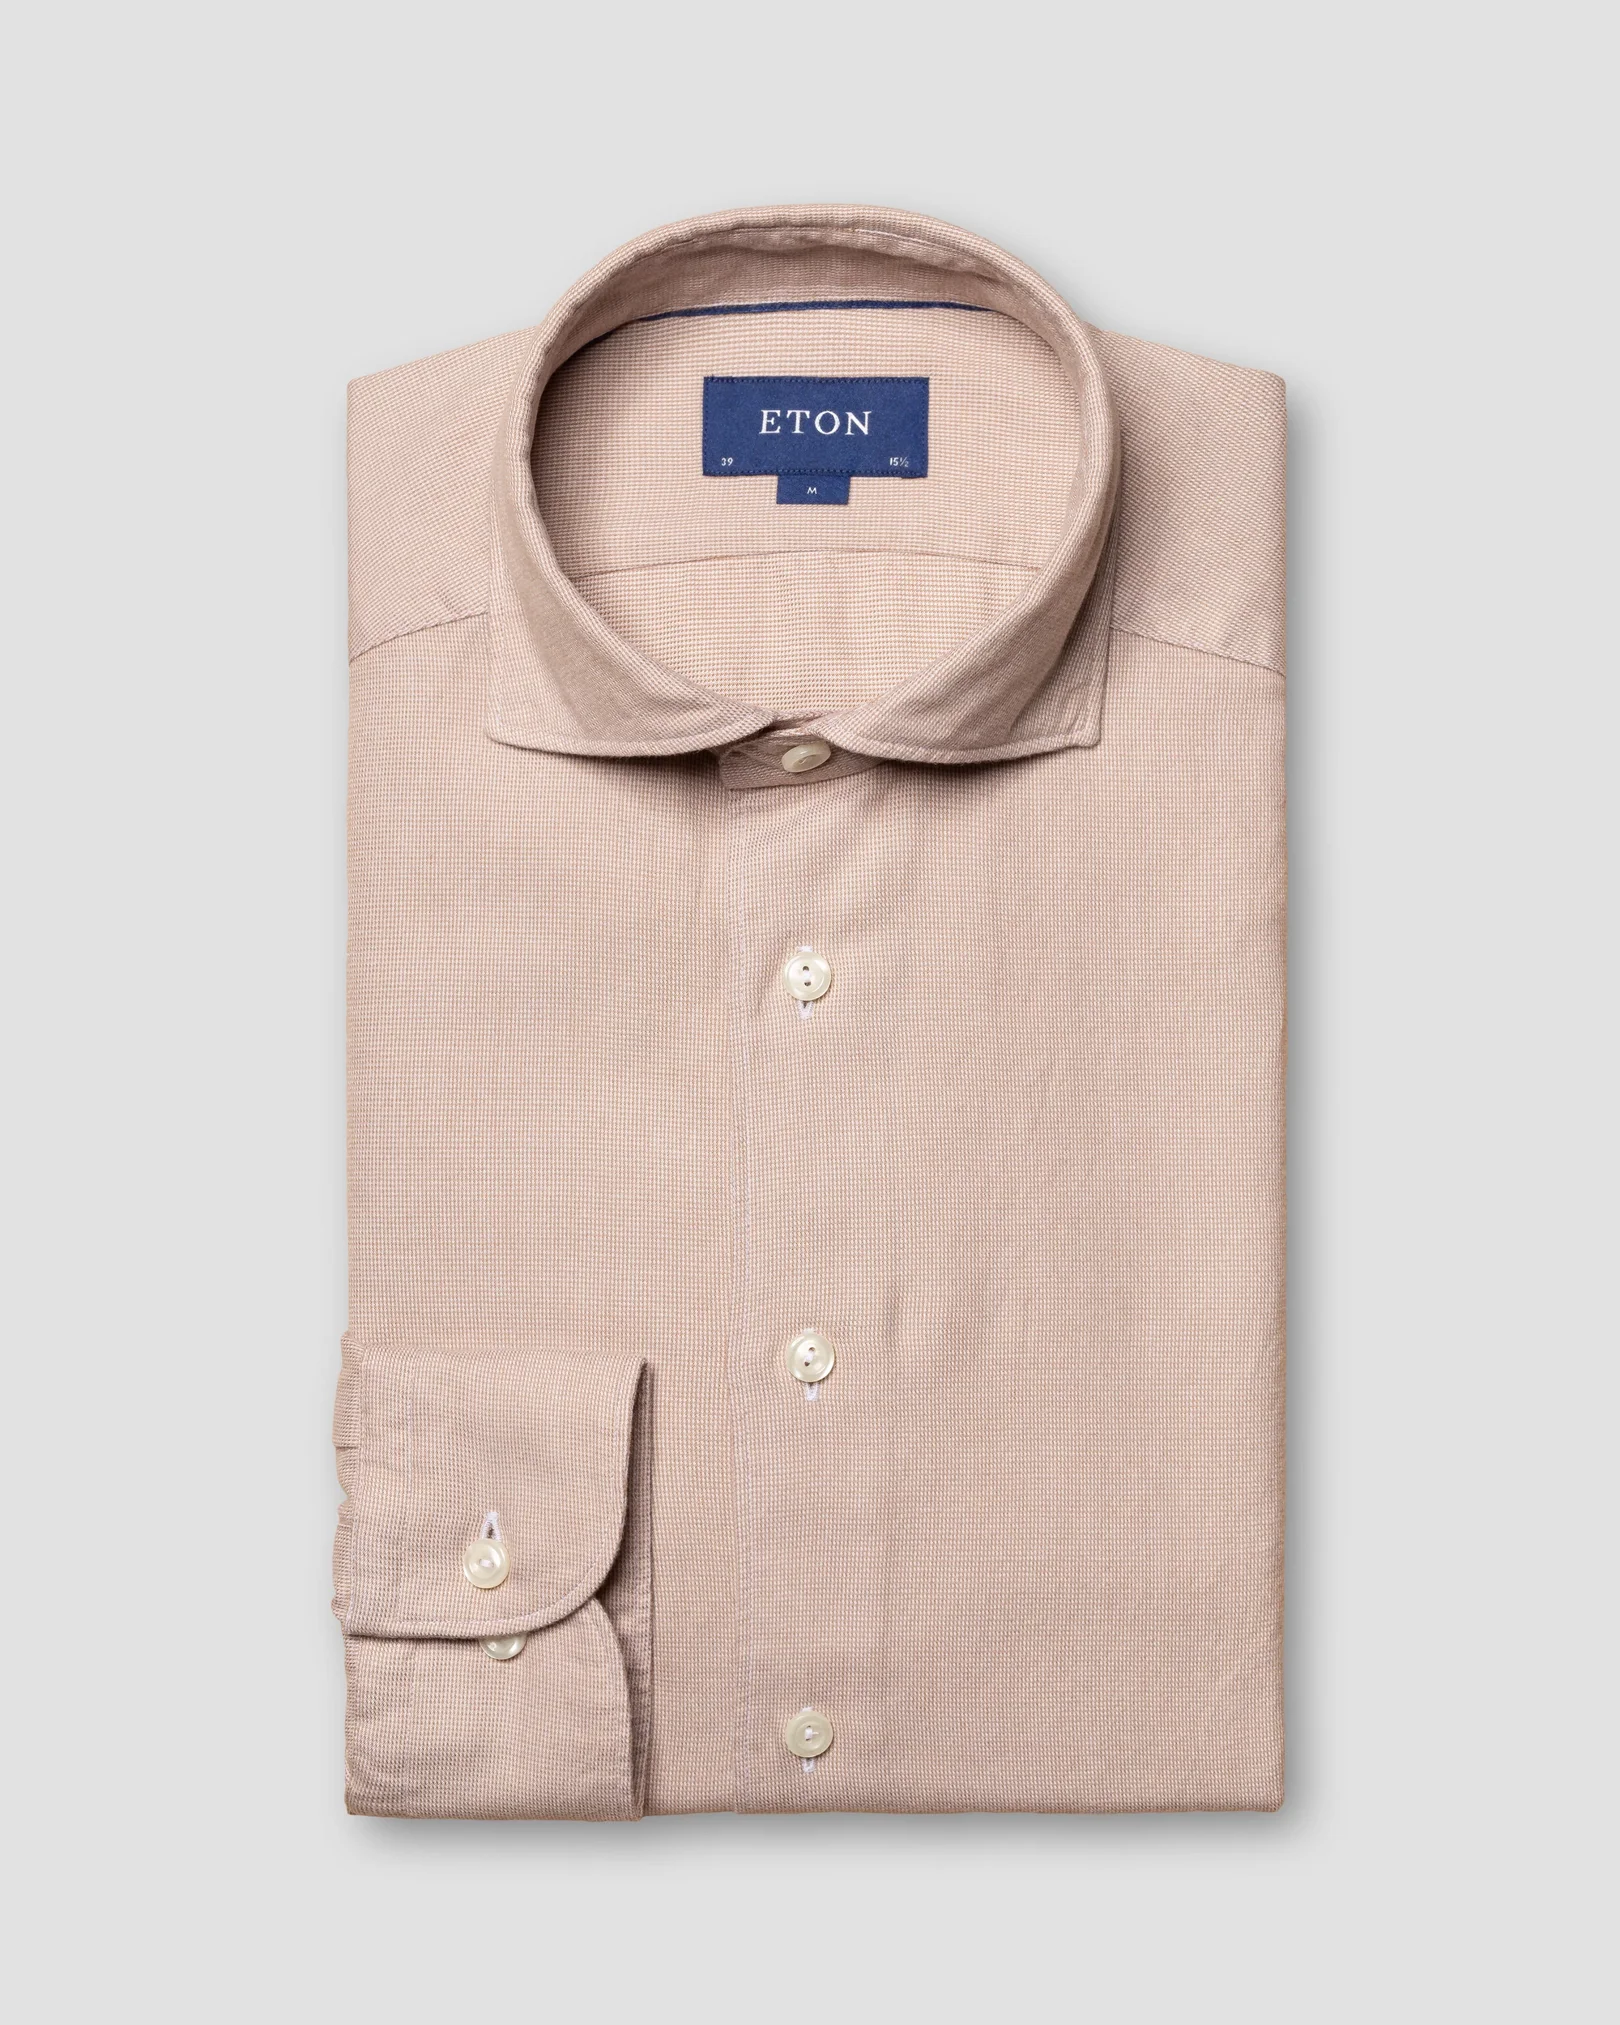 Eton - light brown cotton tencel tm flannel shirt